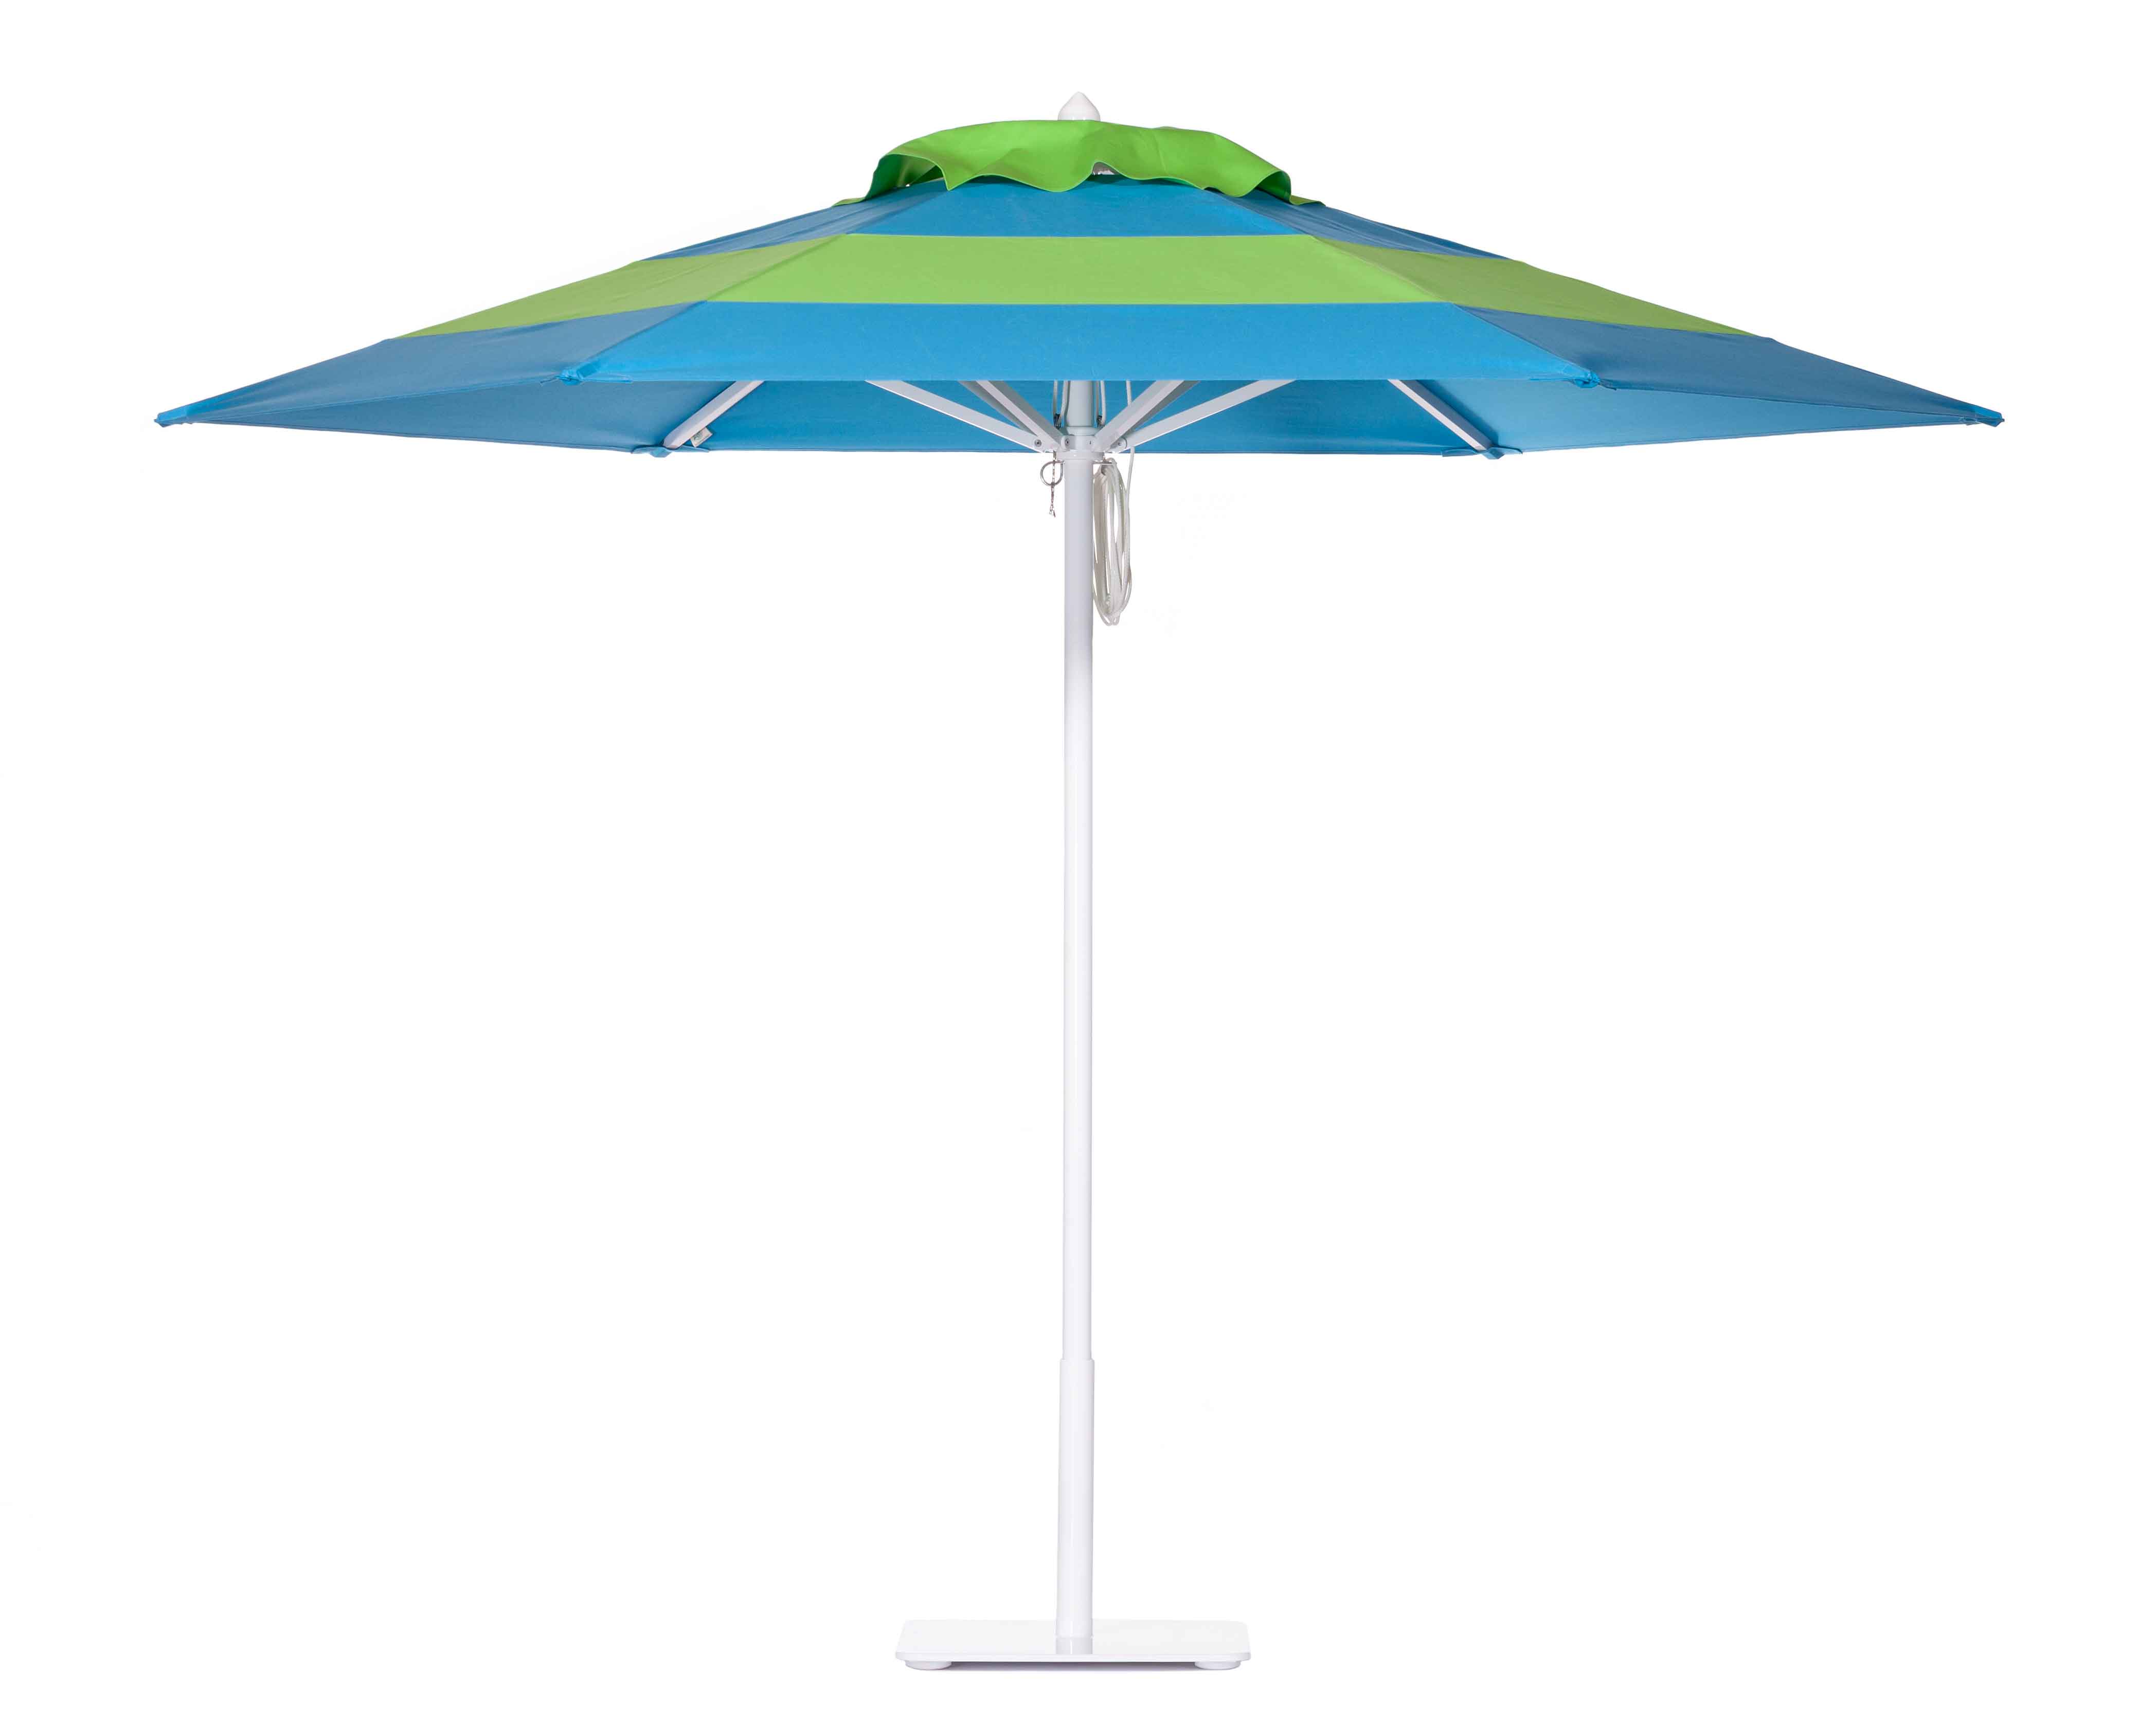 Iguana and Malibu Blue umbrella Image